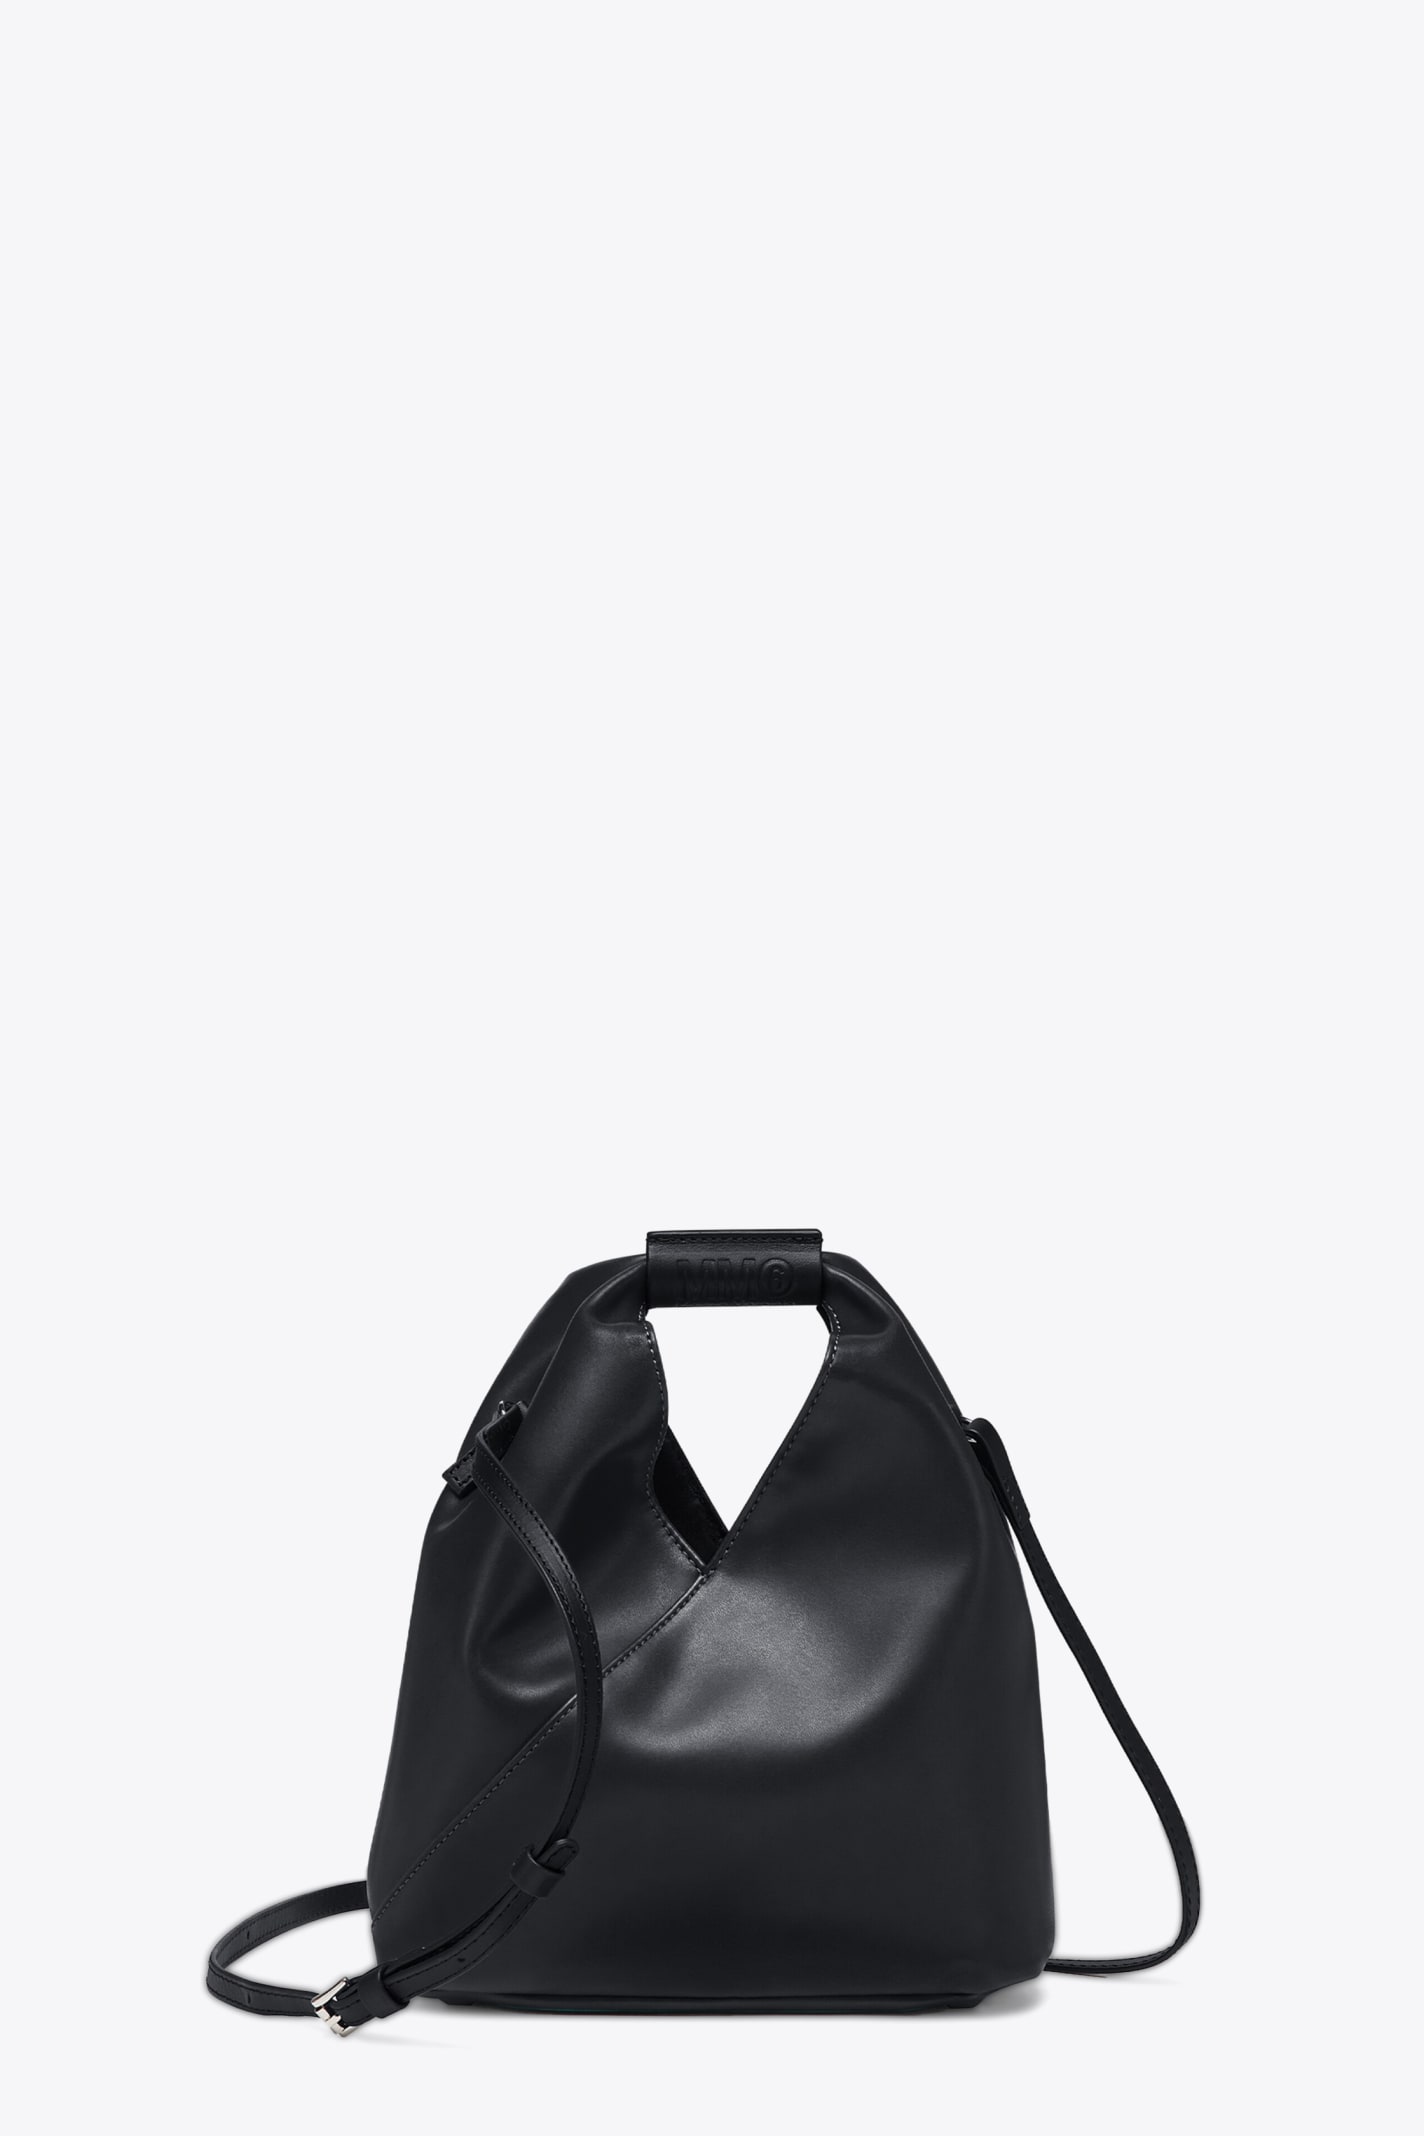 Shop Mm6 Maison Margiela Borsa Mano Black Syntethic Leather Japanese Bag With Shoulder Strap In Nero